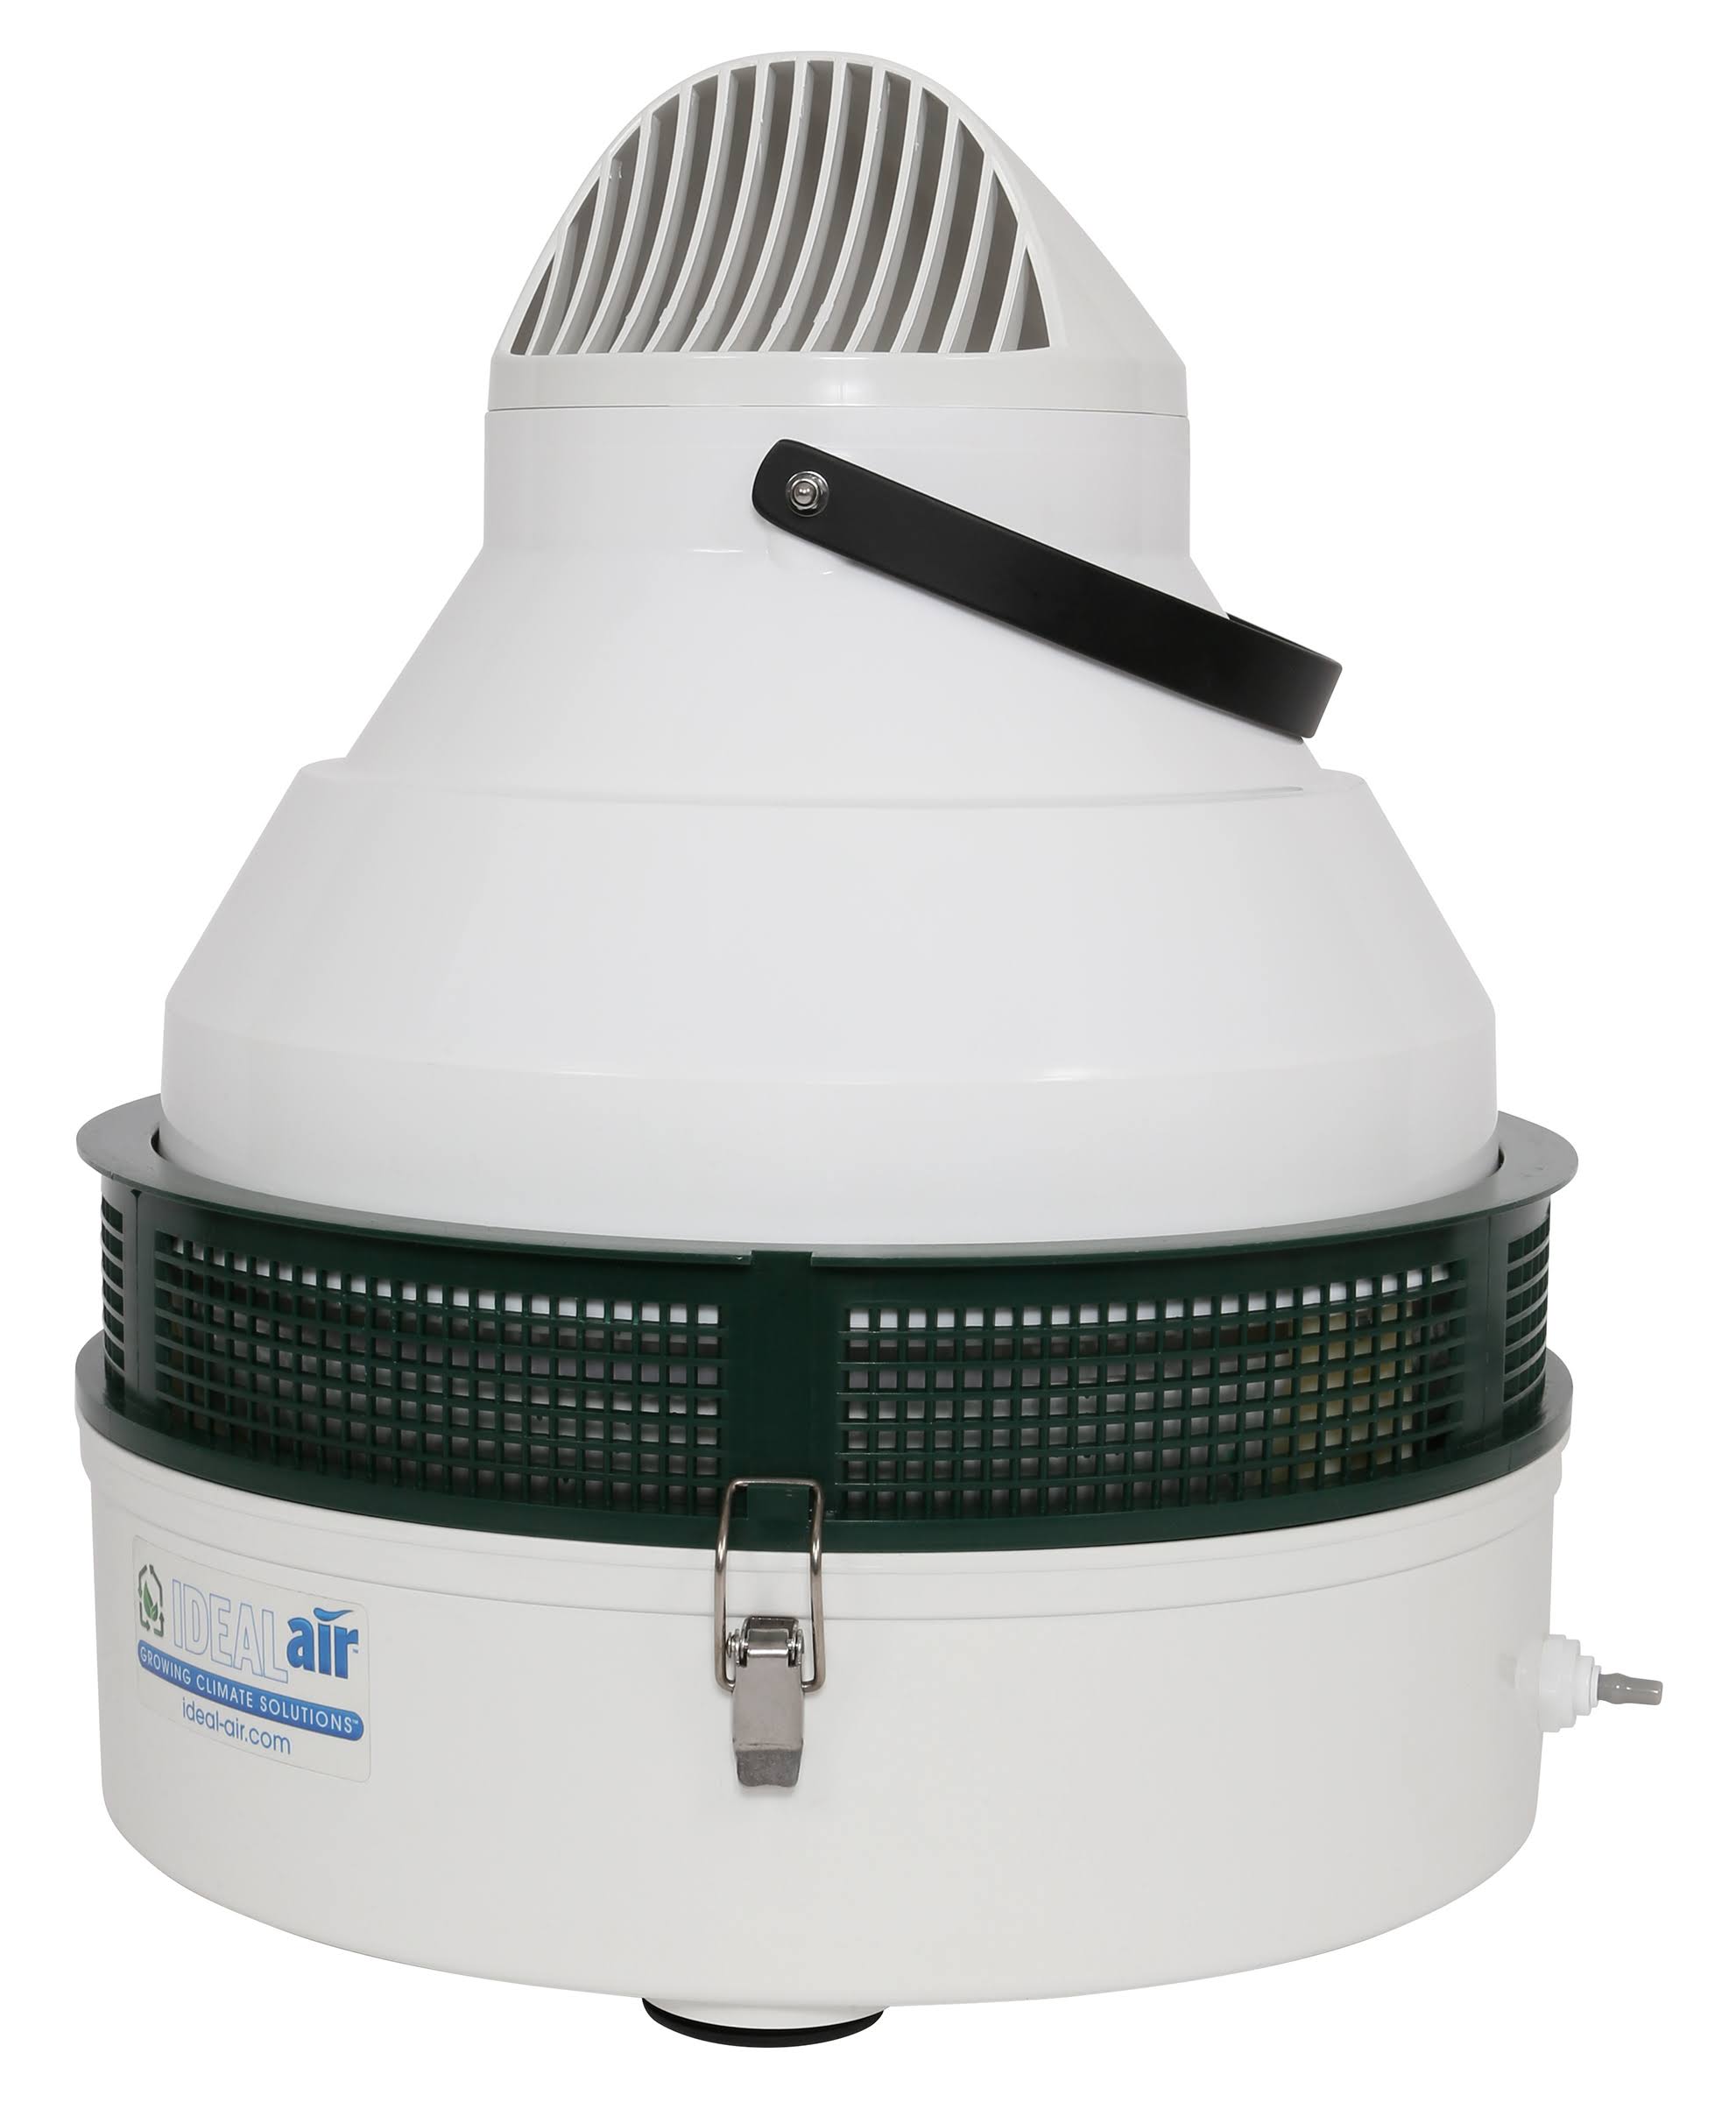 Ideal-Air 700861 Industrial Grade Humidifier - 200 Pint